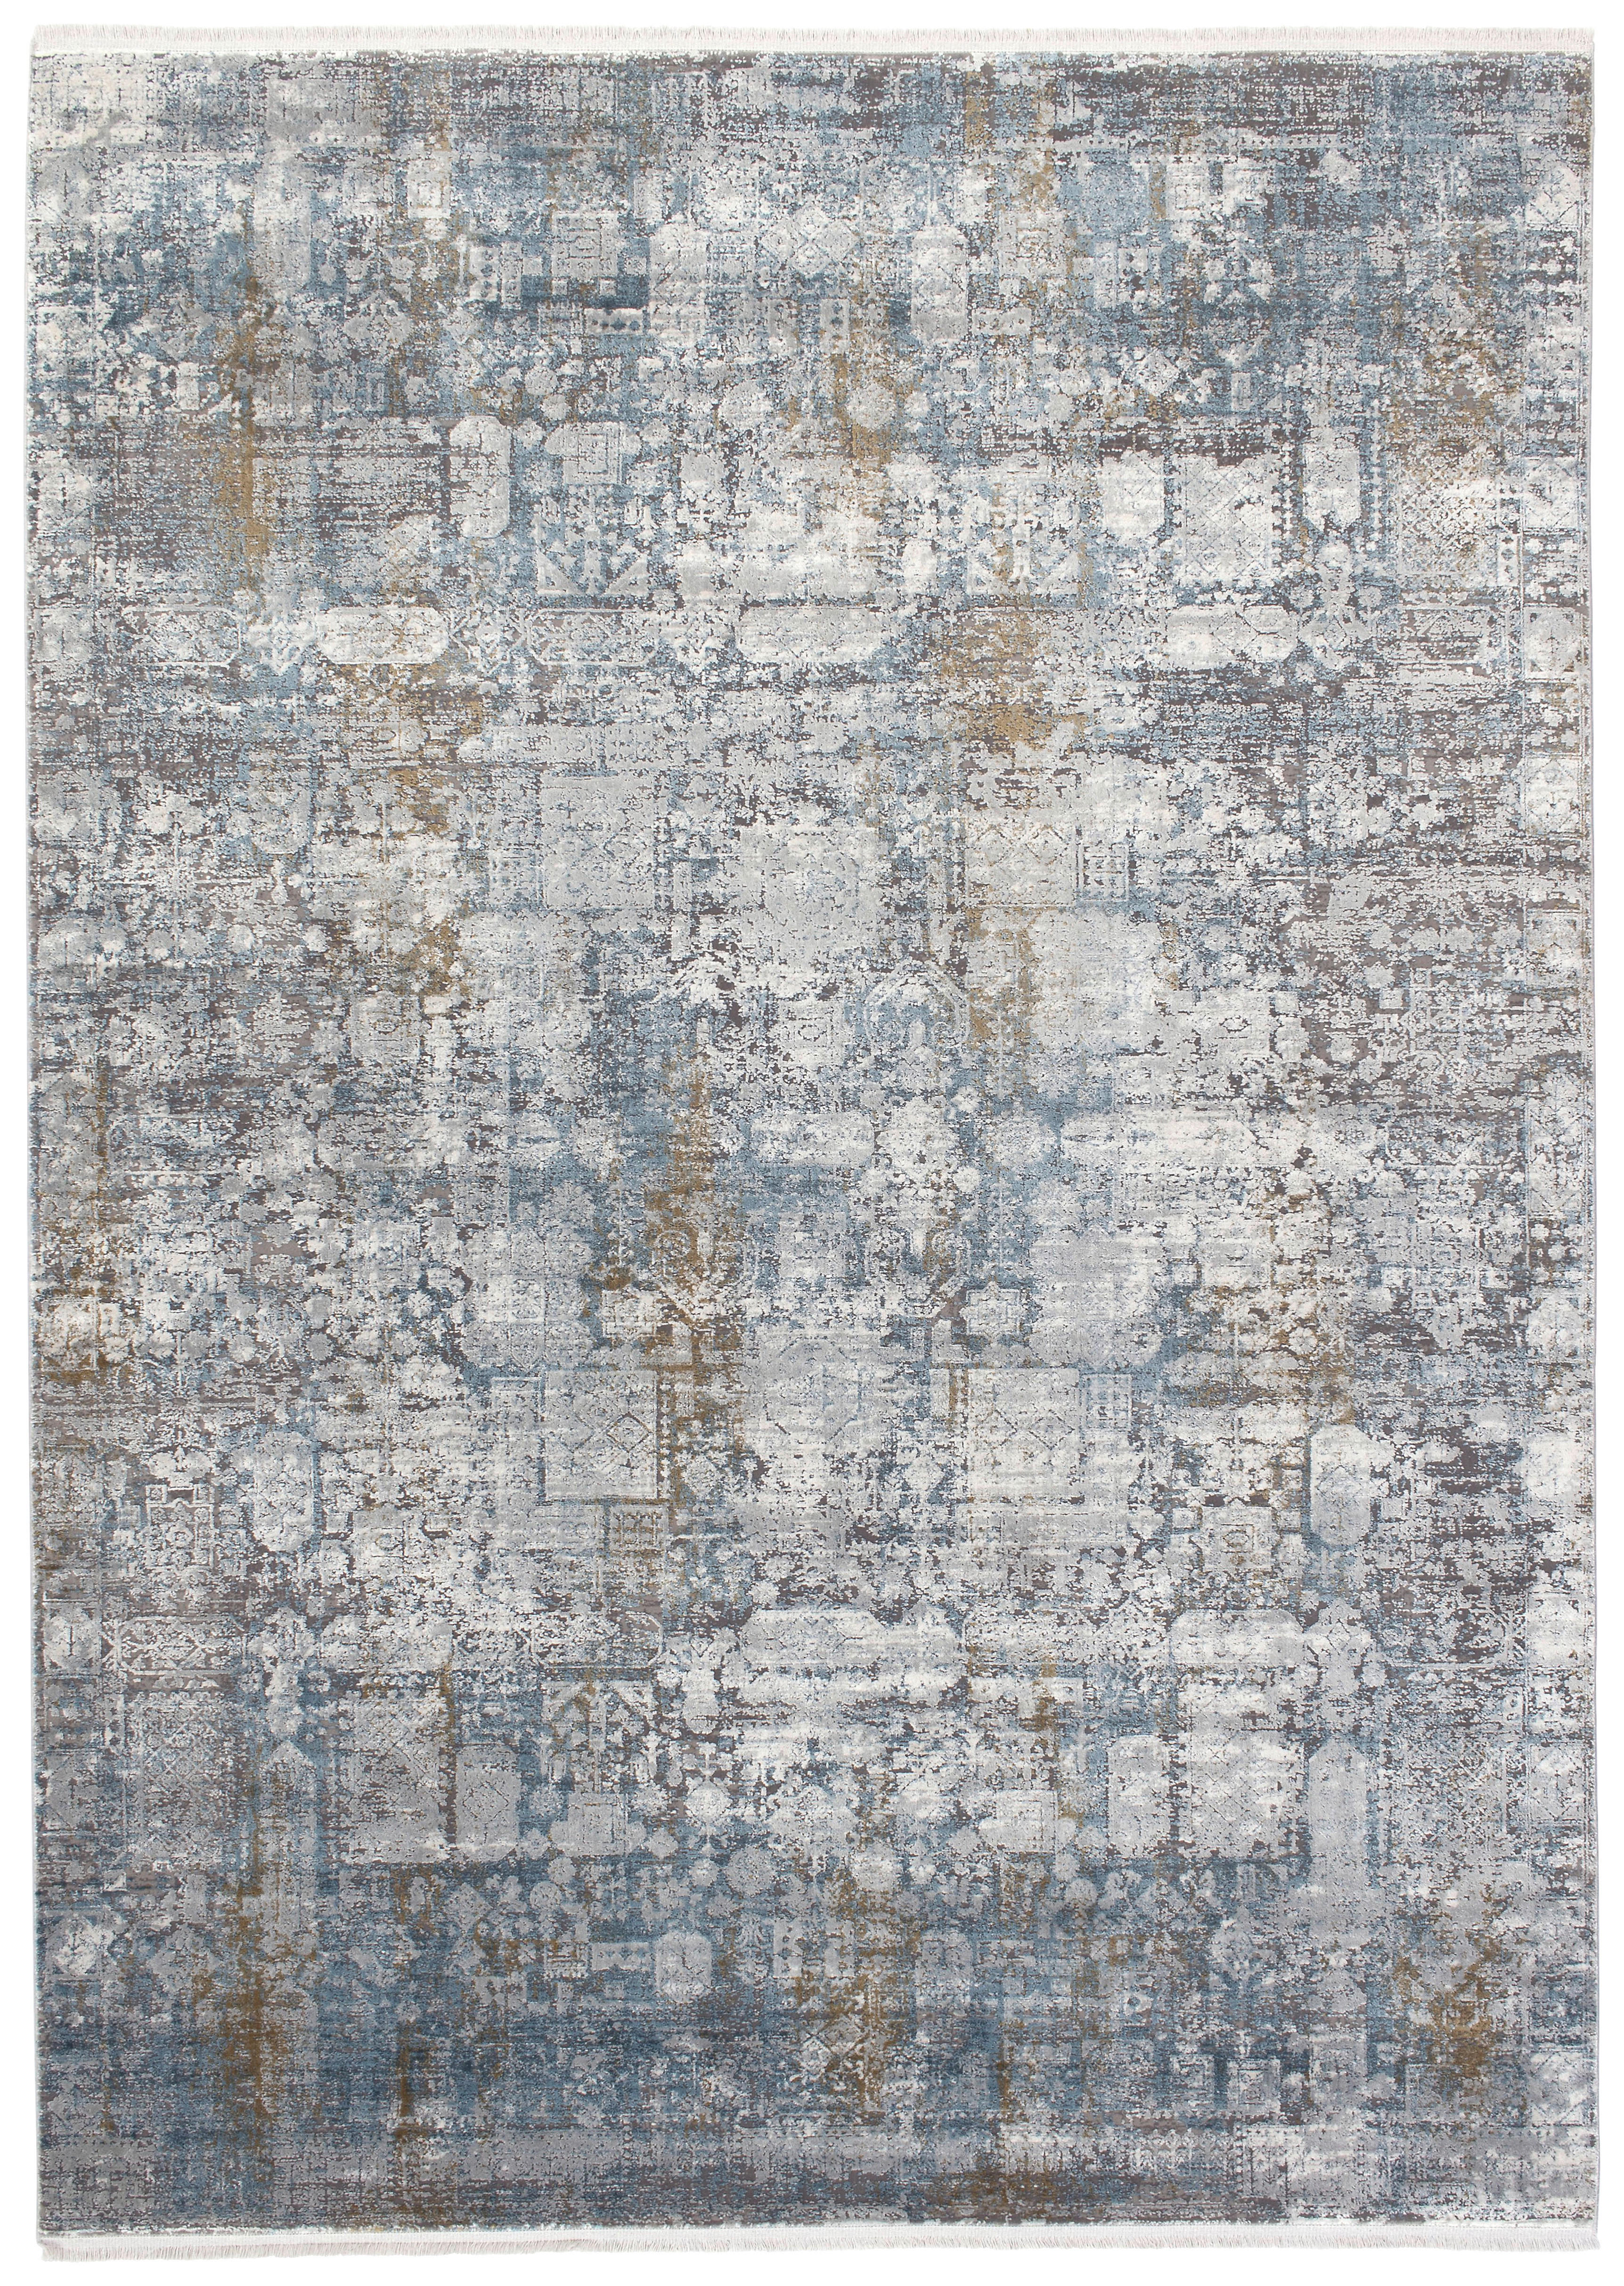 WEBTEPPICH  160/230 cm  Blau, Grau   - Blau/Grau, Design, Textil (160/230cm) - Musterring